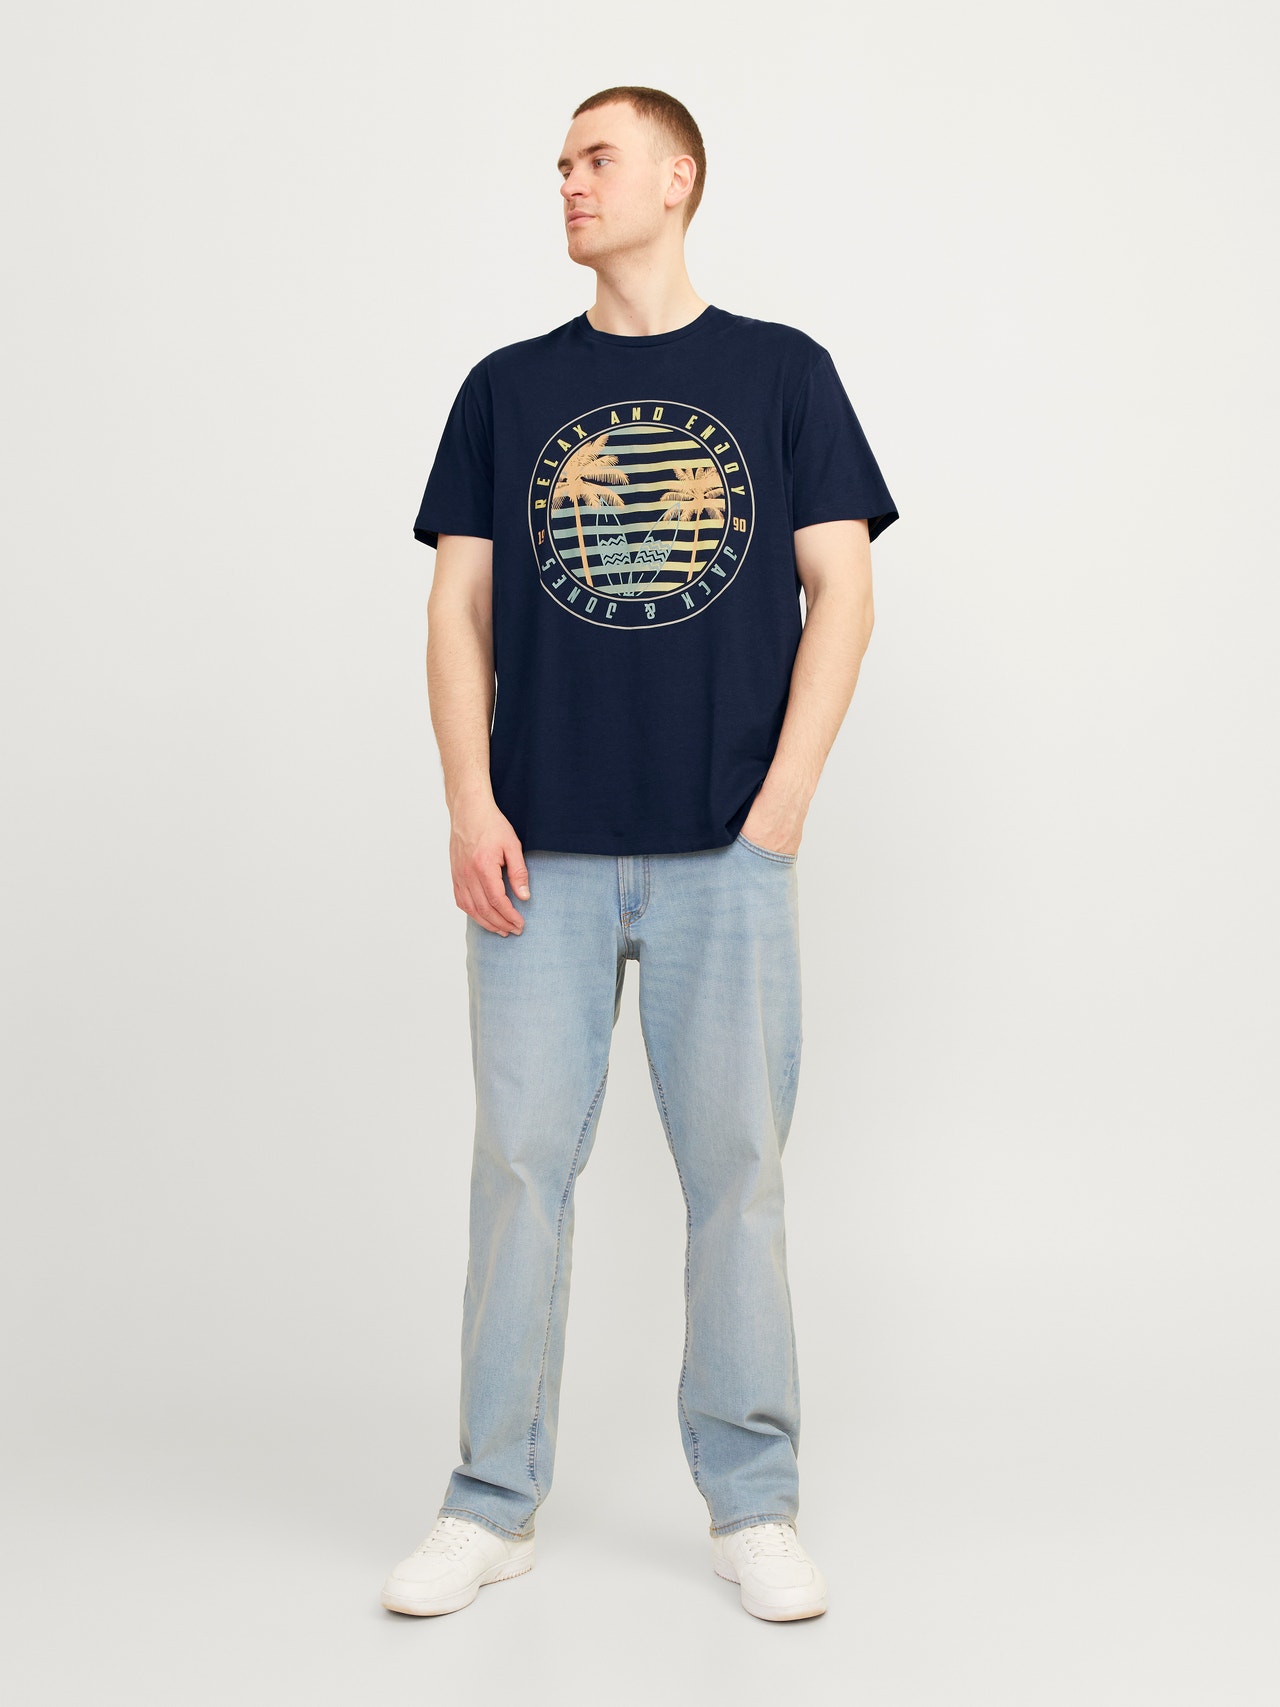 Jack & Jones Plus Size T-shirt Estampar -Navy Blazer - 12254907